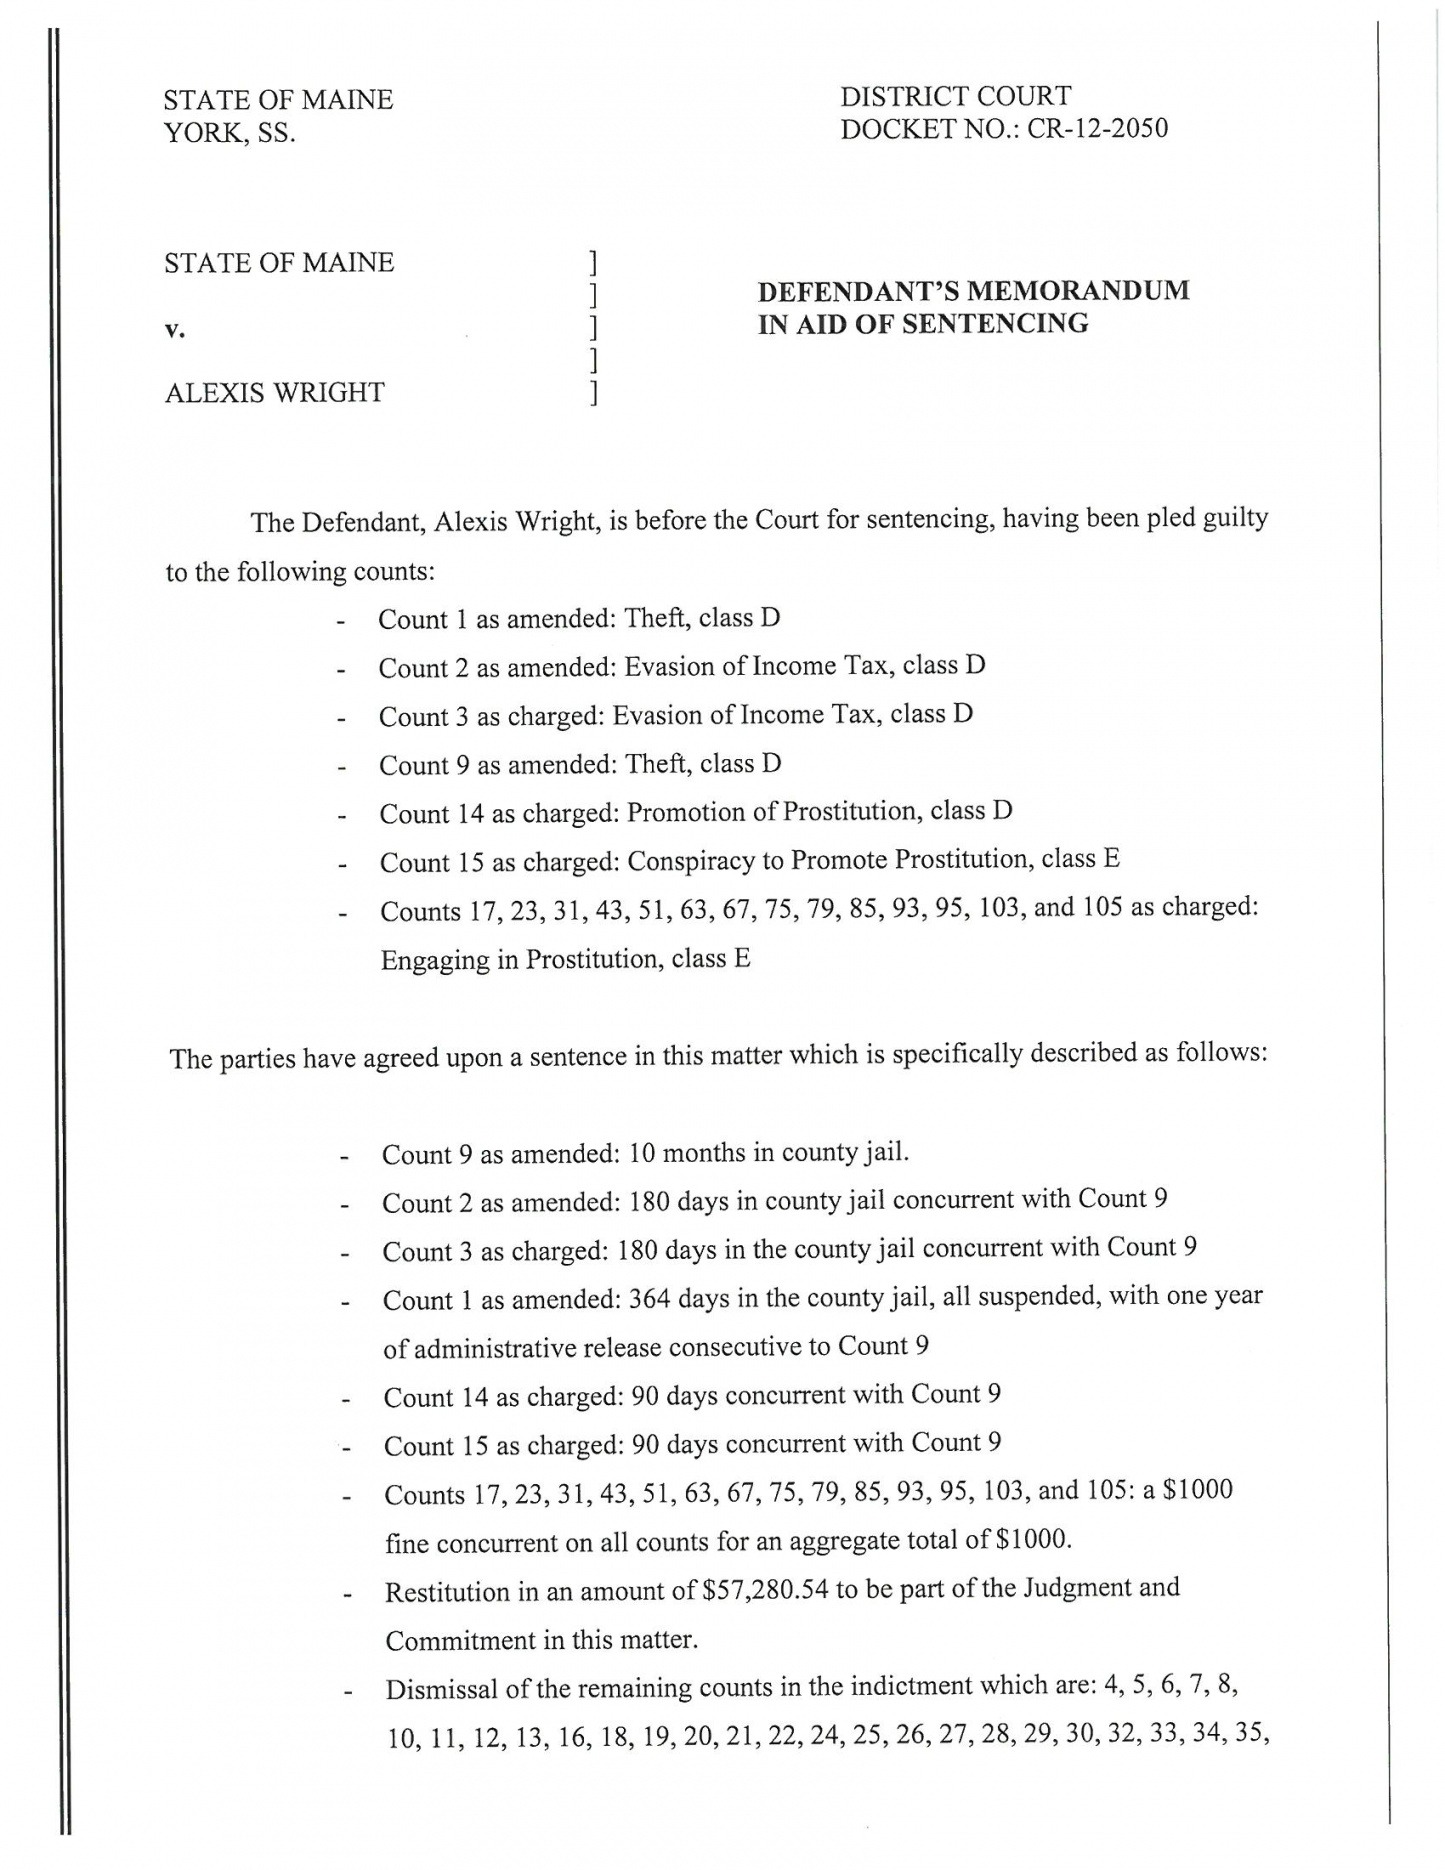 Free High Court Memorandum Template Excel